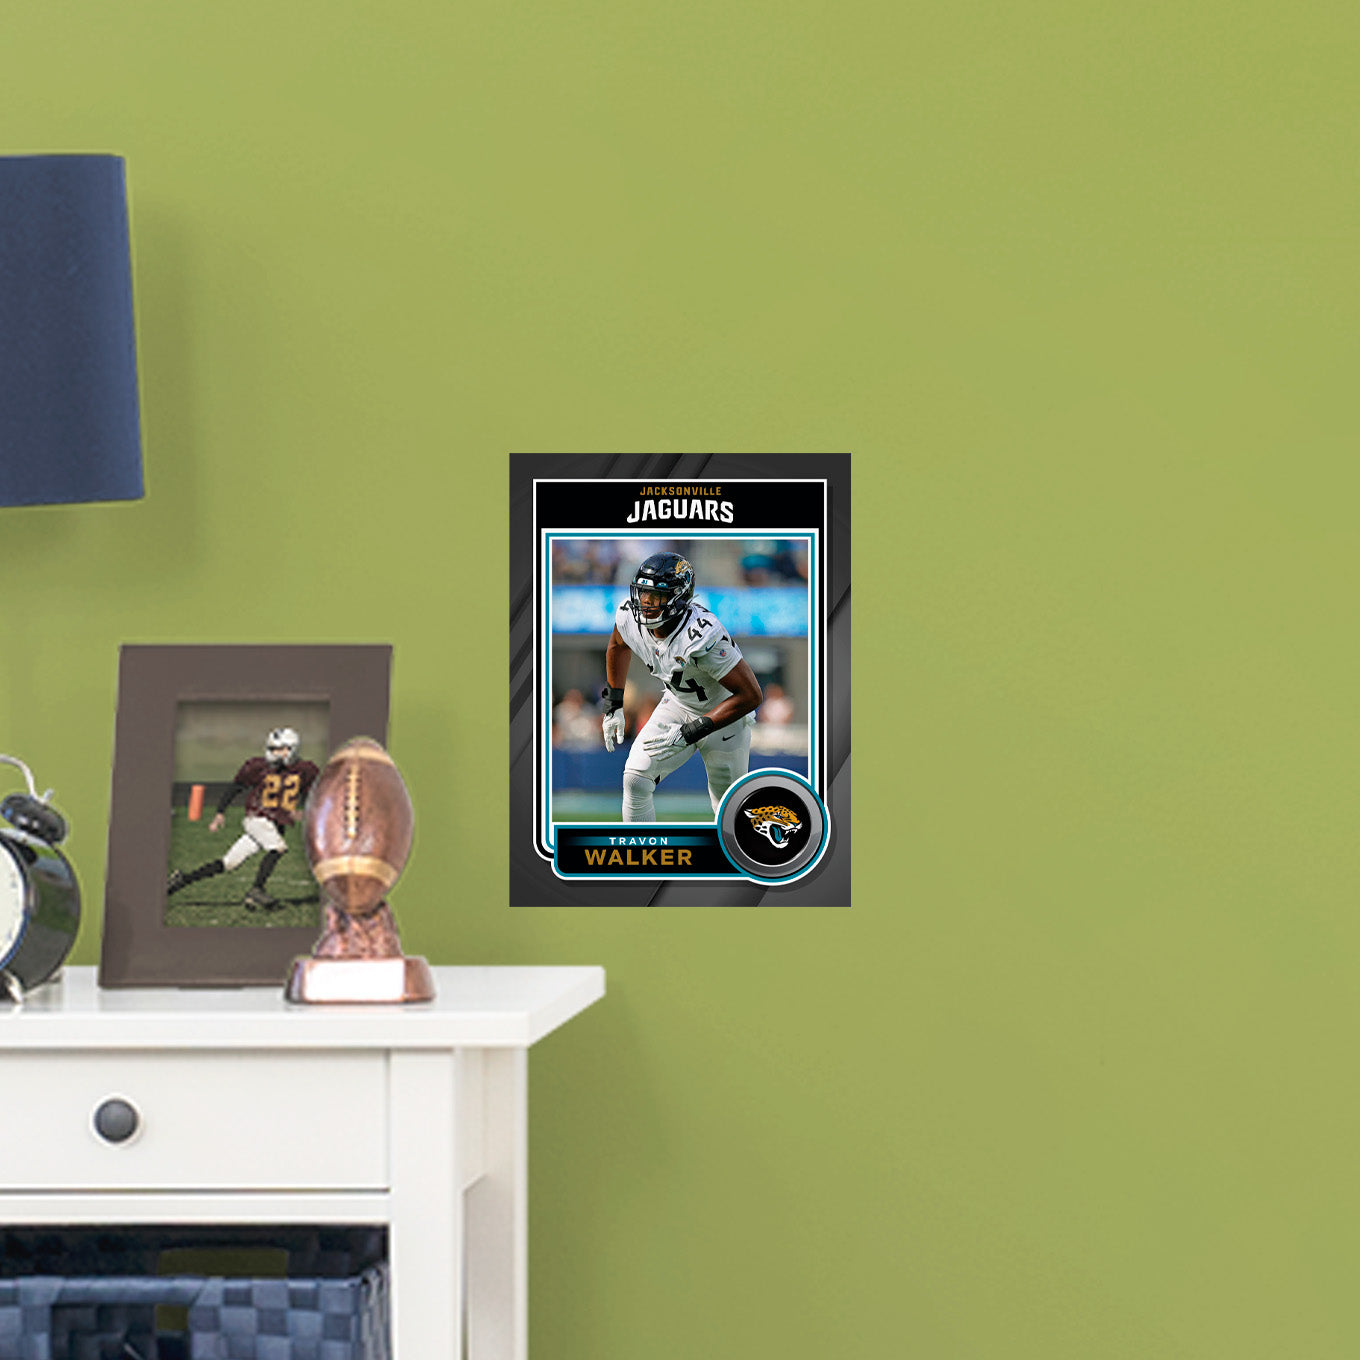 Jacksonville Jaguars: Travon Walker Poster - Officially Licensed NFL Removable Adhesive Decal